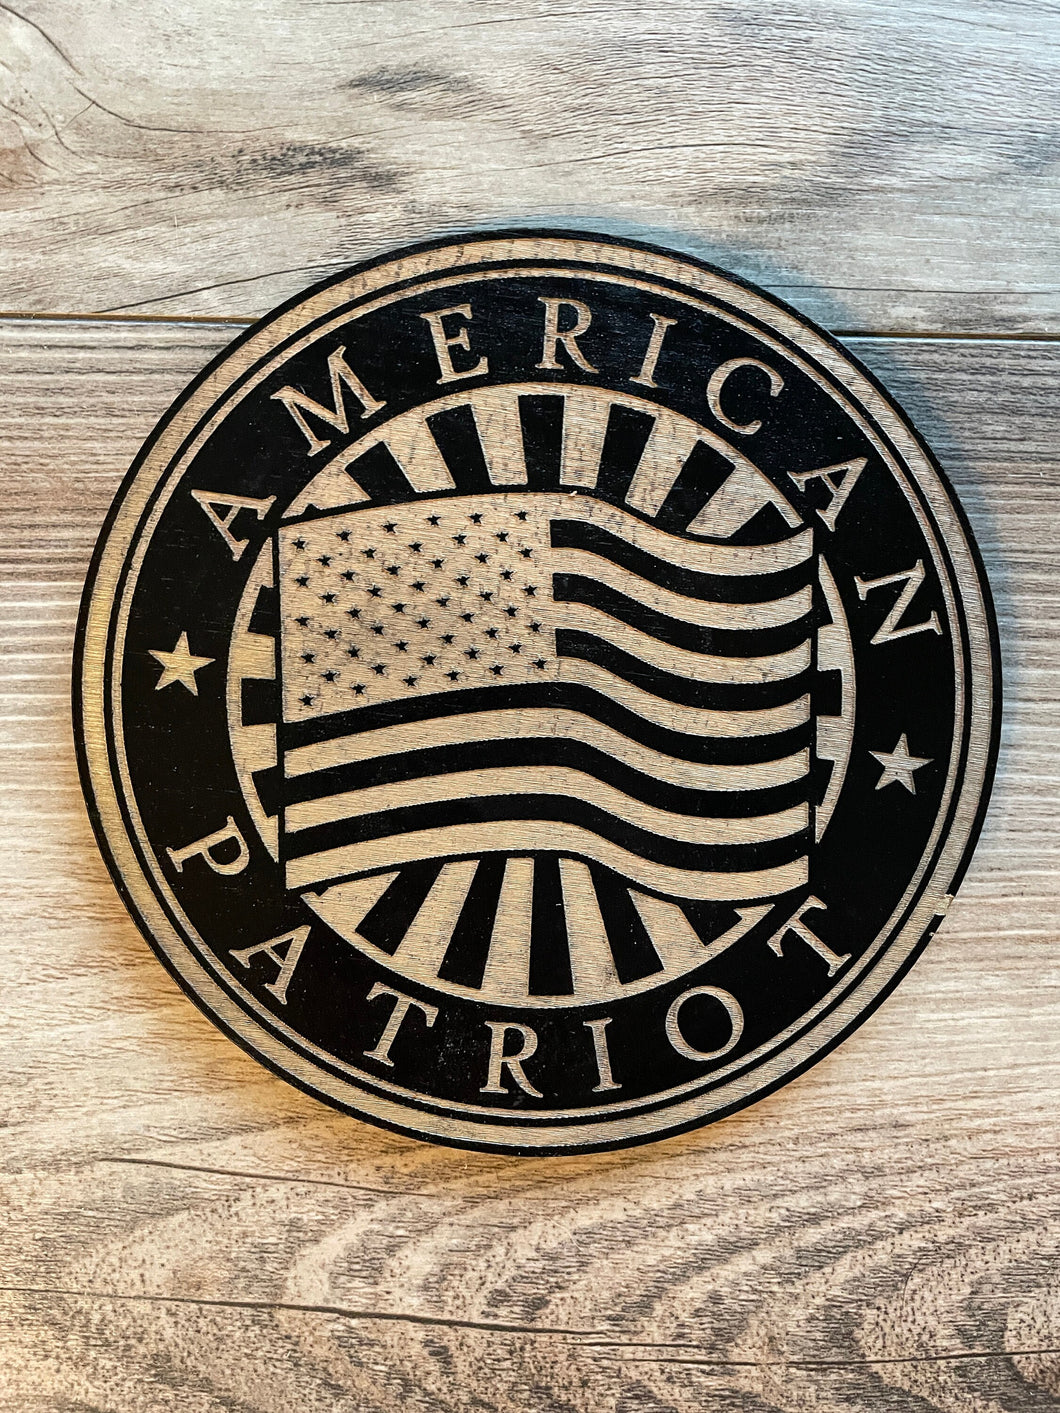 American Patriot Round Sign, American, Patriot, USA, Veteran, Soldier, Patriot, Round Sign, Wood Sign